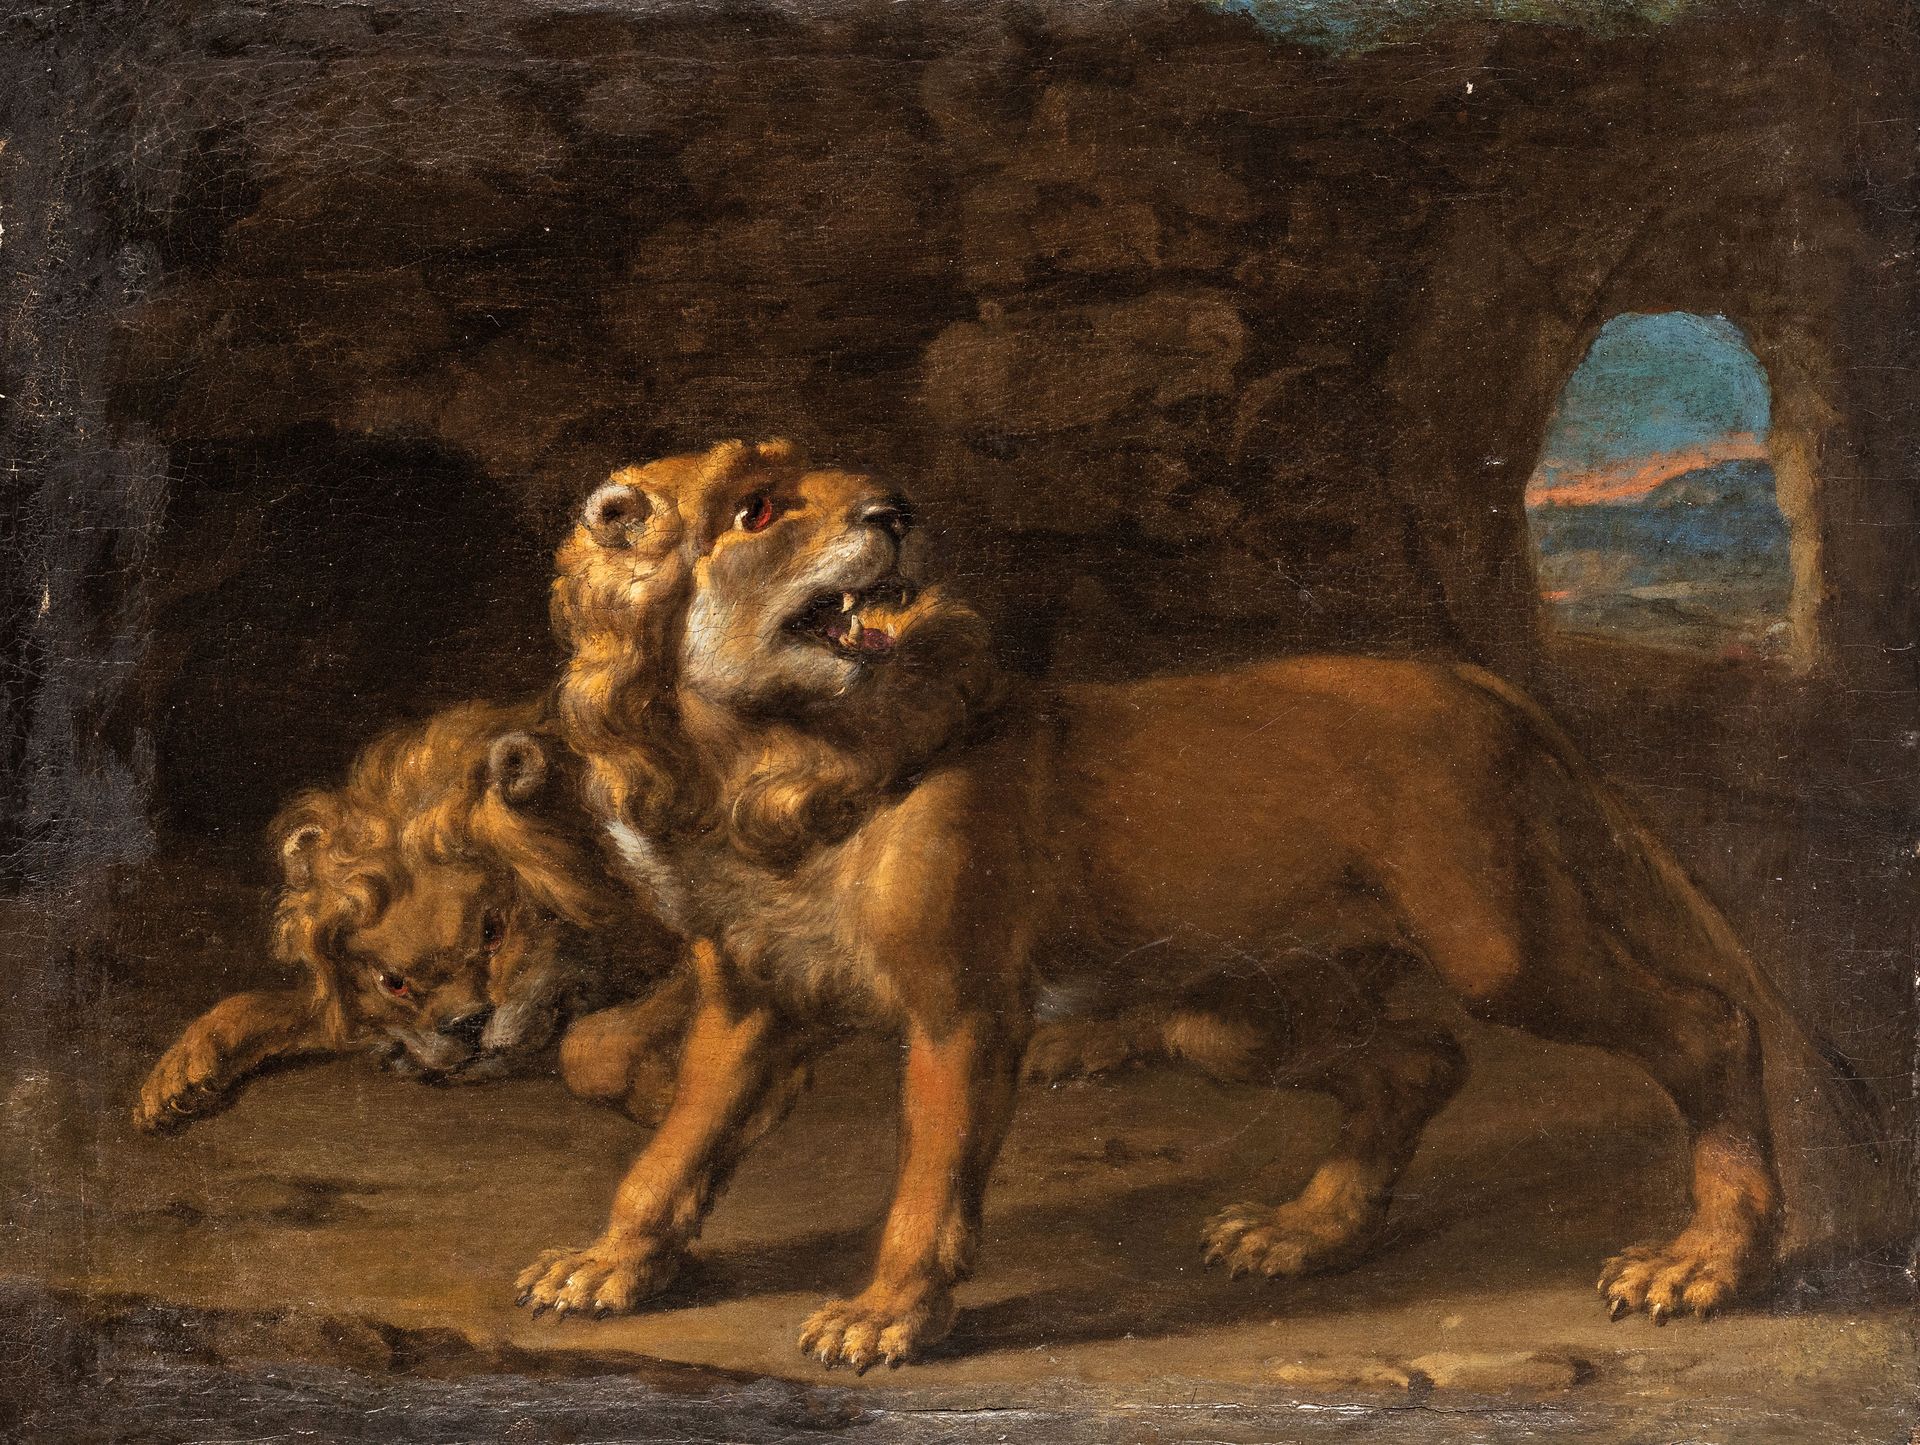 PIETRO PAOLO RUBENS (maniera di) (Siegen, 1577 - Antwerp, 1640)
Lions 
Oil on ca&hellip;